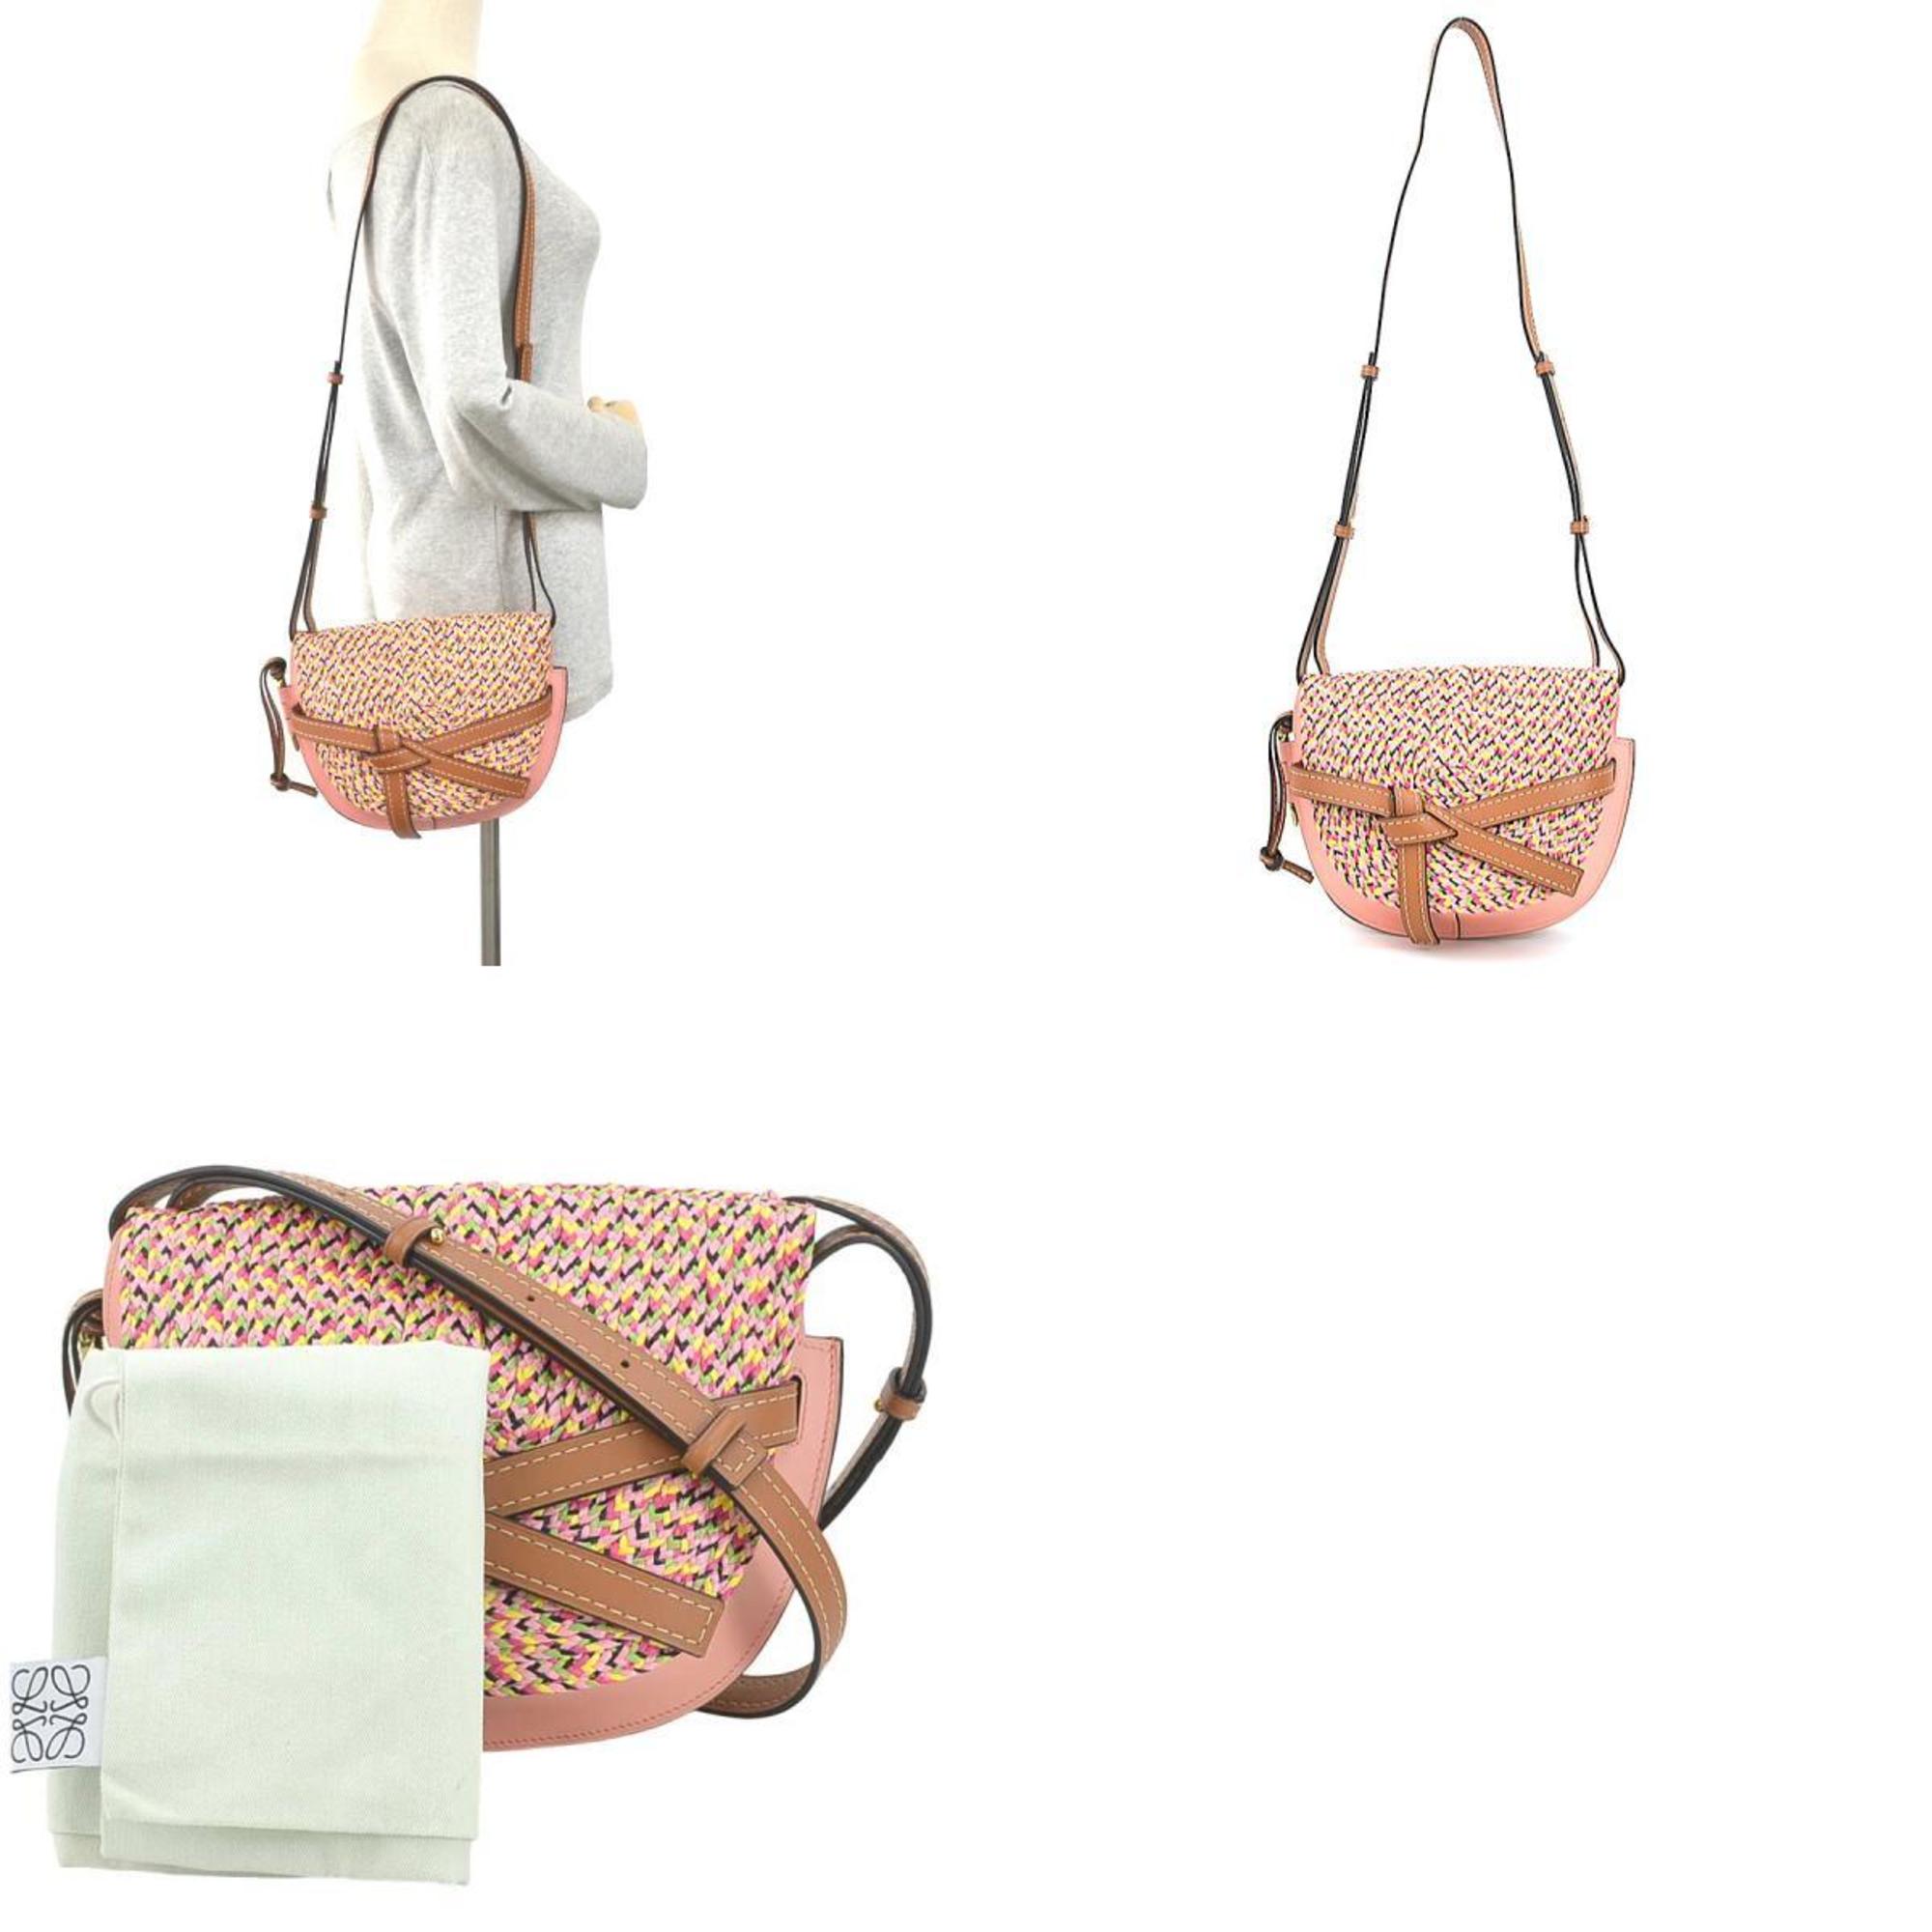 LOEWE Shoulder Bag Gate Small Leather Pink Multicolor Women's 99914g